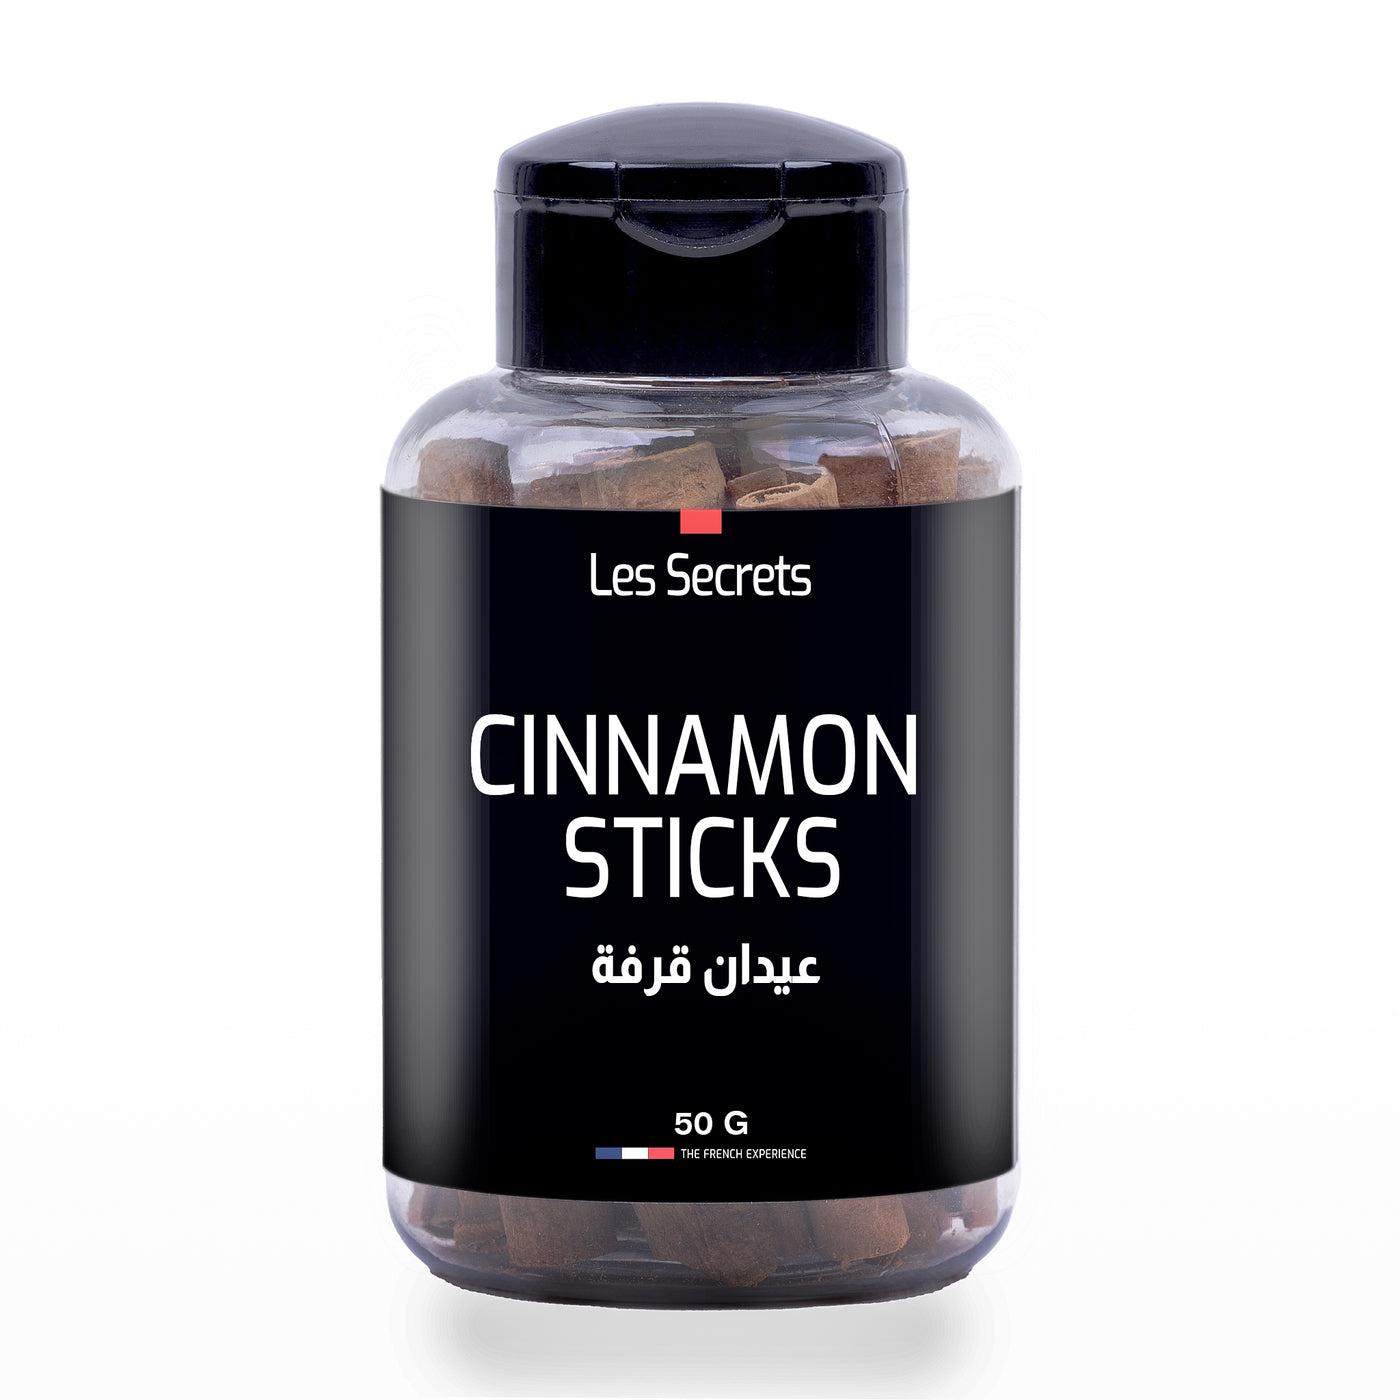 Cinnamon Sticks - عيدان قرفة